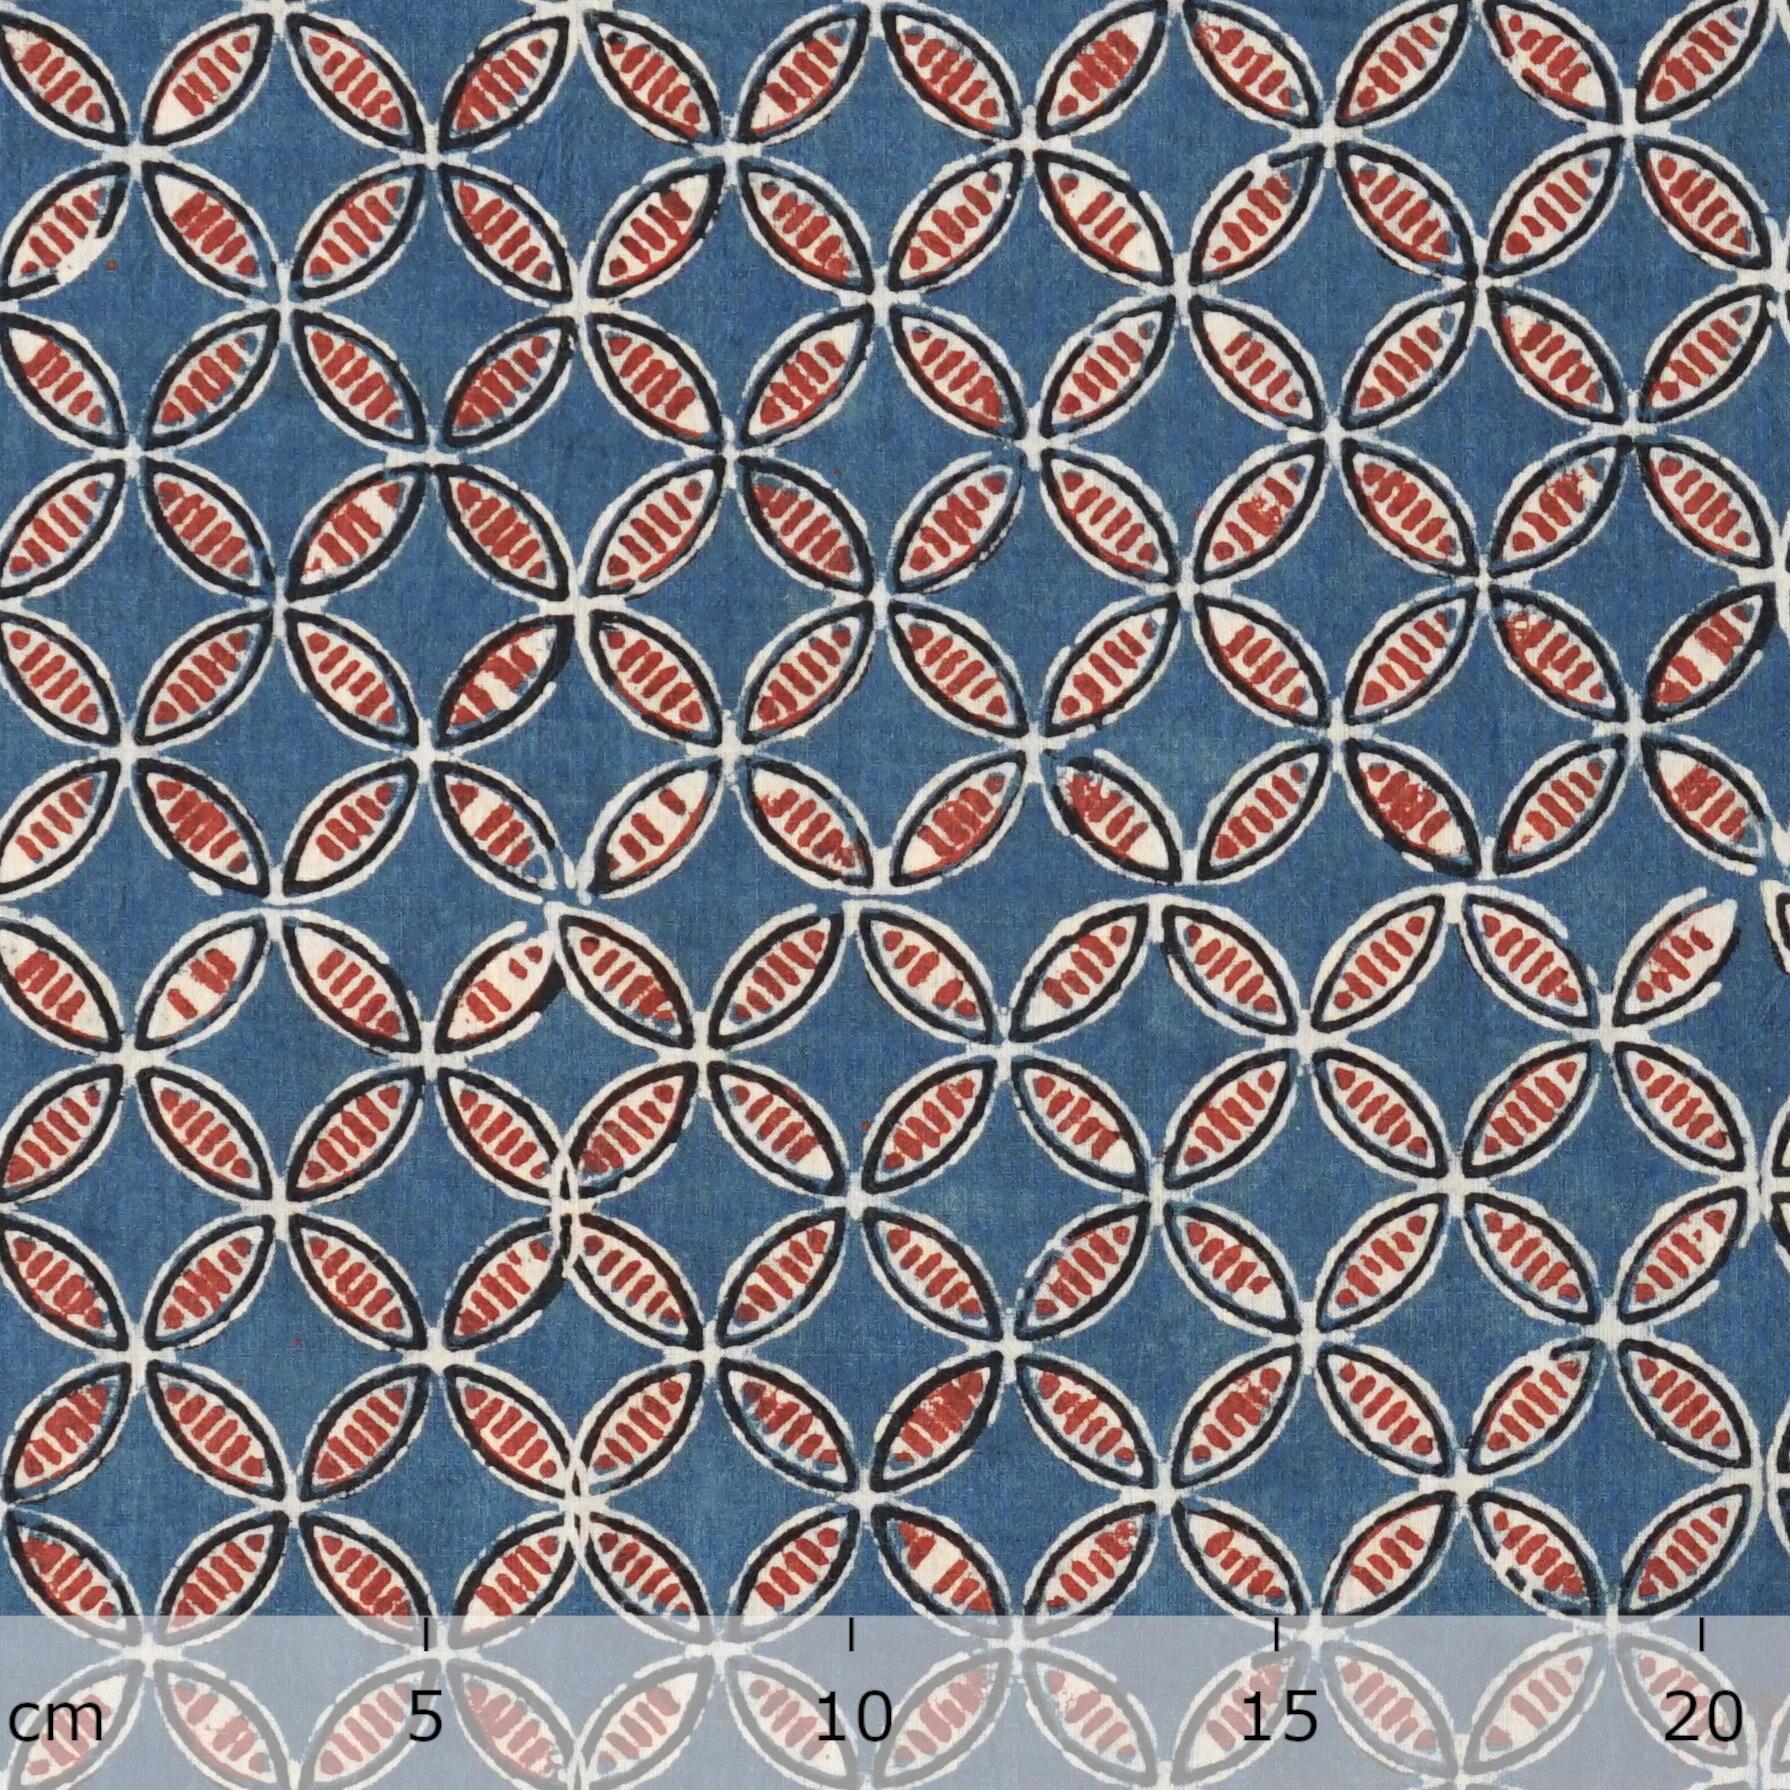 4 - SIK58 - Hand Block-Printed Cotton - Interlocking Circles Design - Red Alizarin, Indigo Blue, Black Dyes - Ruler